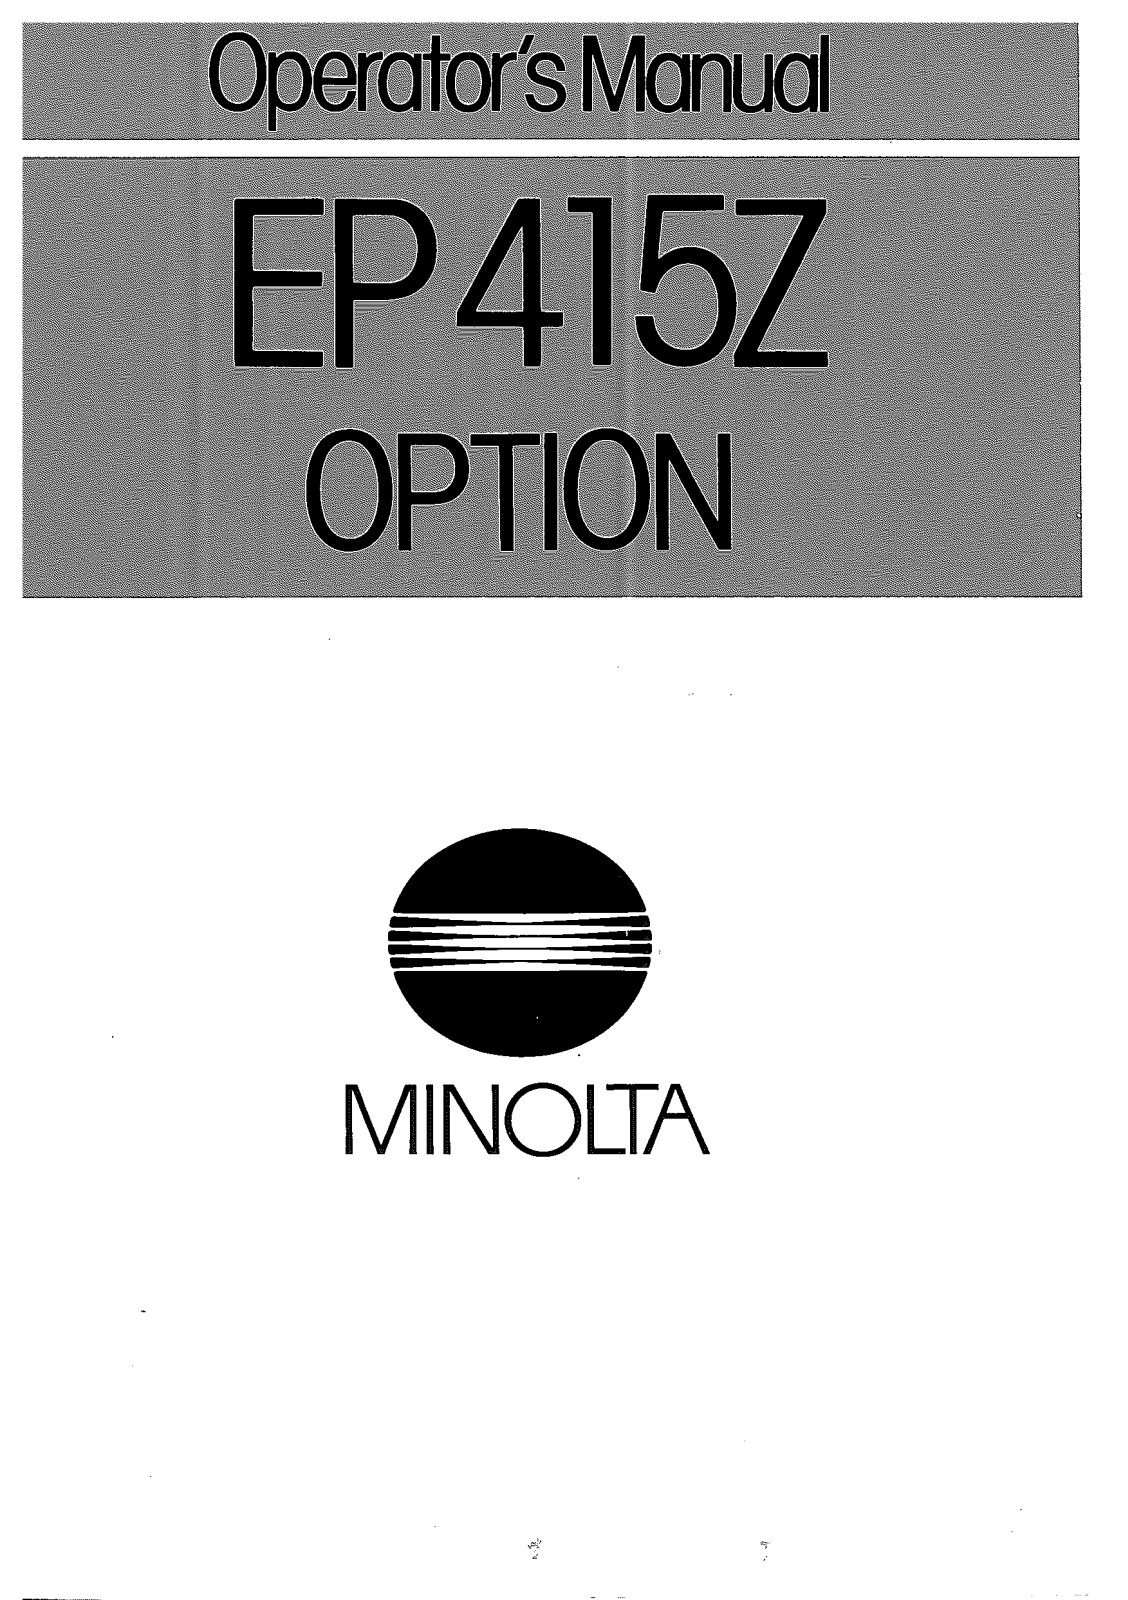 Konica Minolta EP415Z Manual